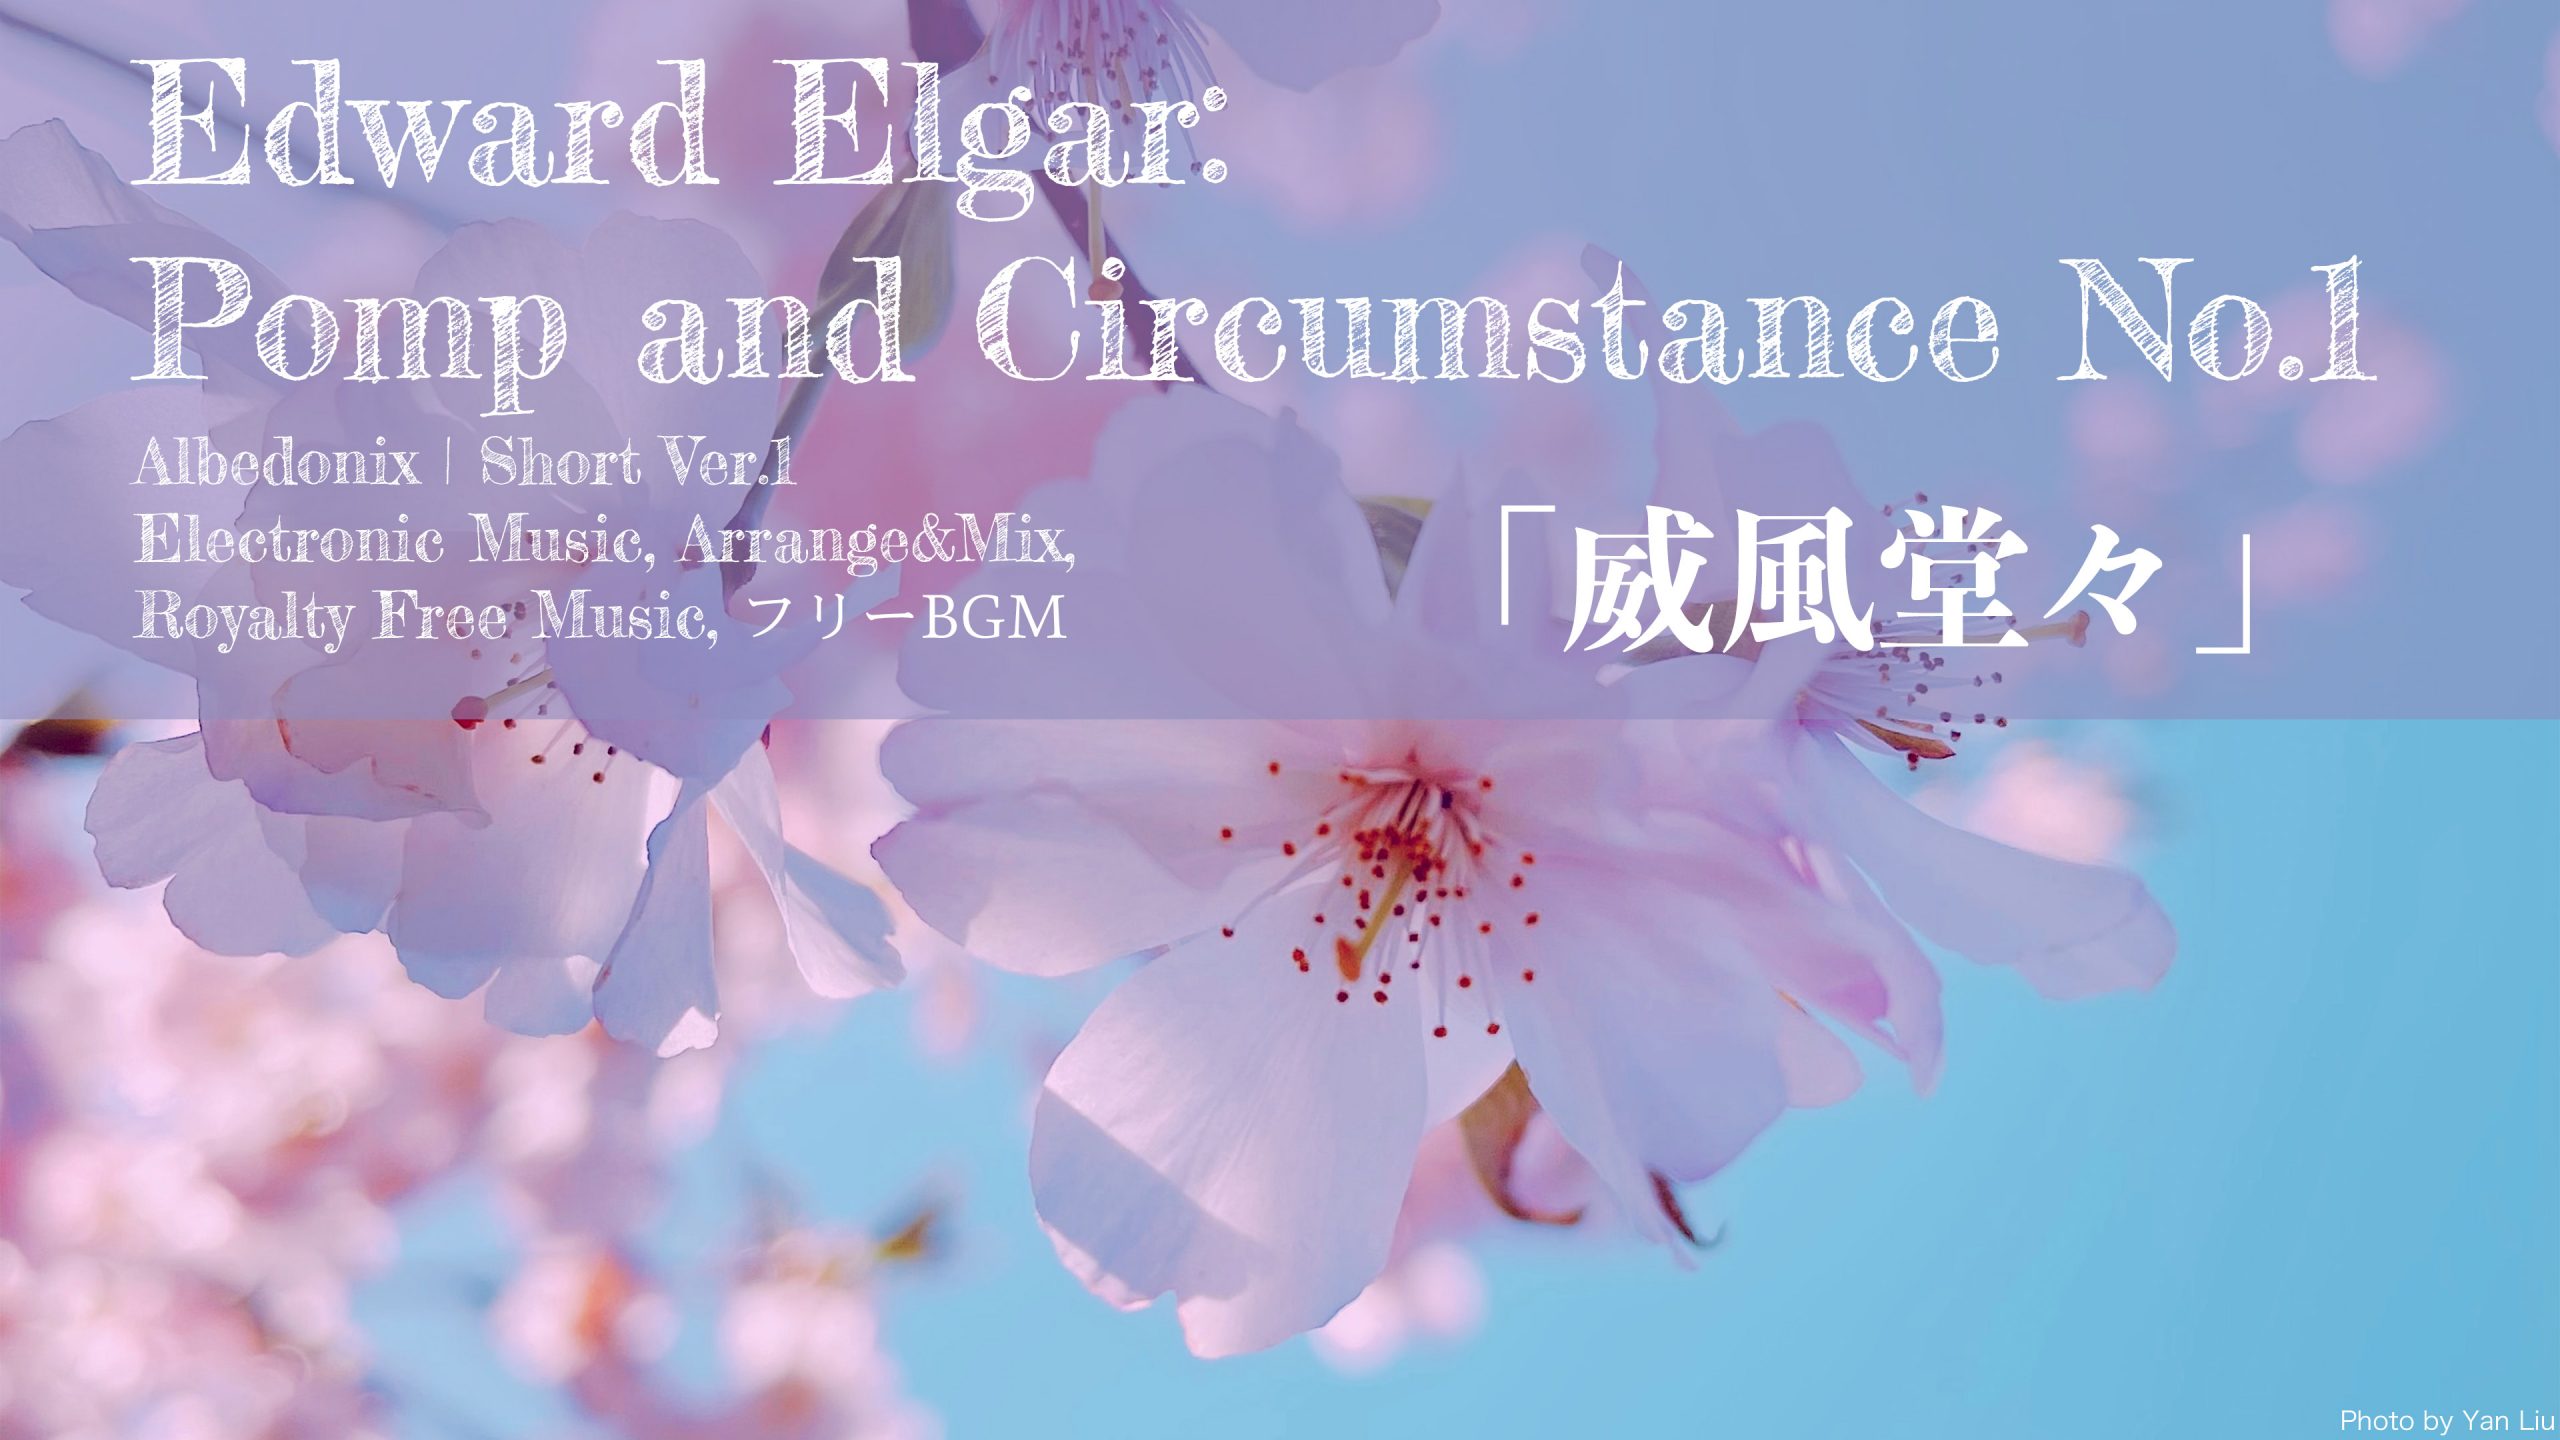 Royalty Free Music | Elgar, Pomp and Circumstance, No.1 | Arrange&Mix | Short ver. 1 | @Albedonix 【威風堂々 第1番】無料音楽、フリー素材 Edward Elgar, Pomp and Circumstance March, Op. 39, No.1 | Short ver. 1